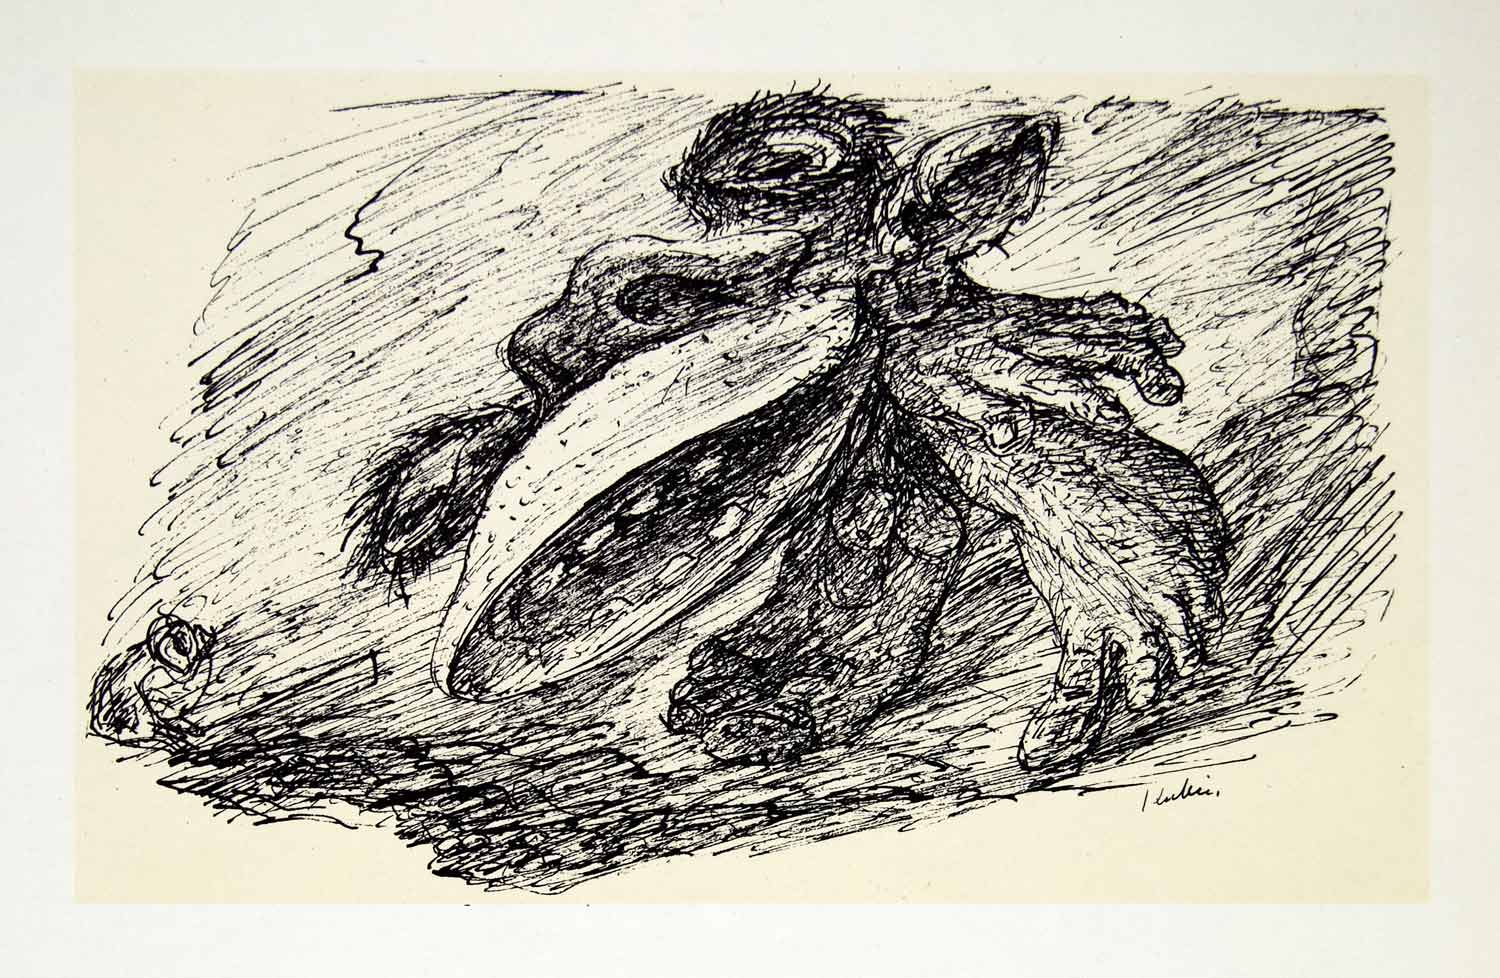 1969 Aquatone Print Alfred Kubin Abstract Modern Art Sketch Scandalmonger XDG2